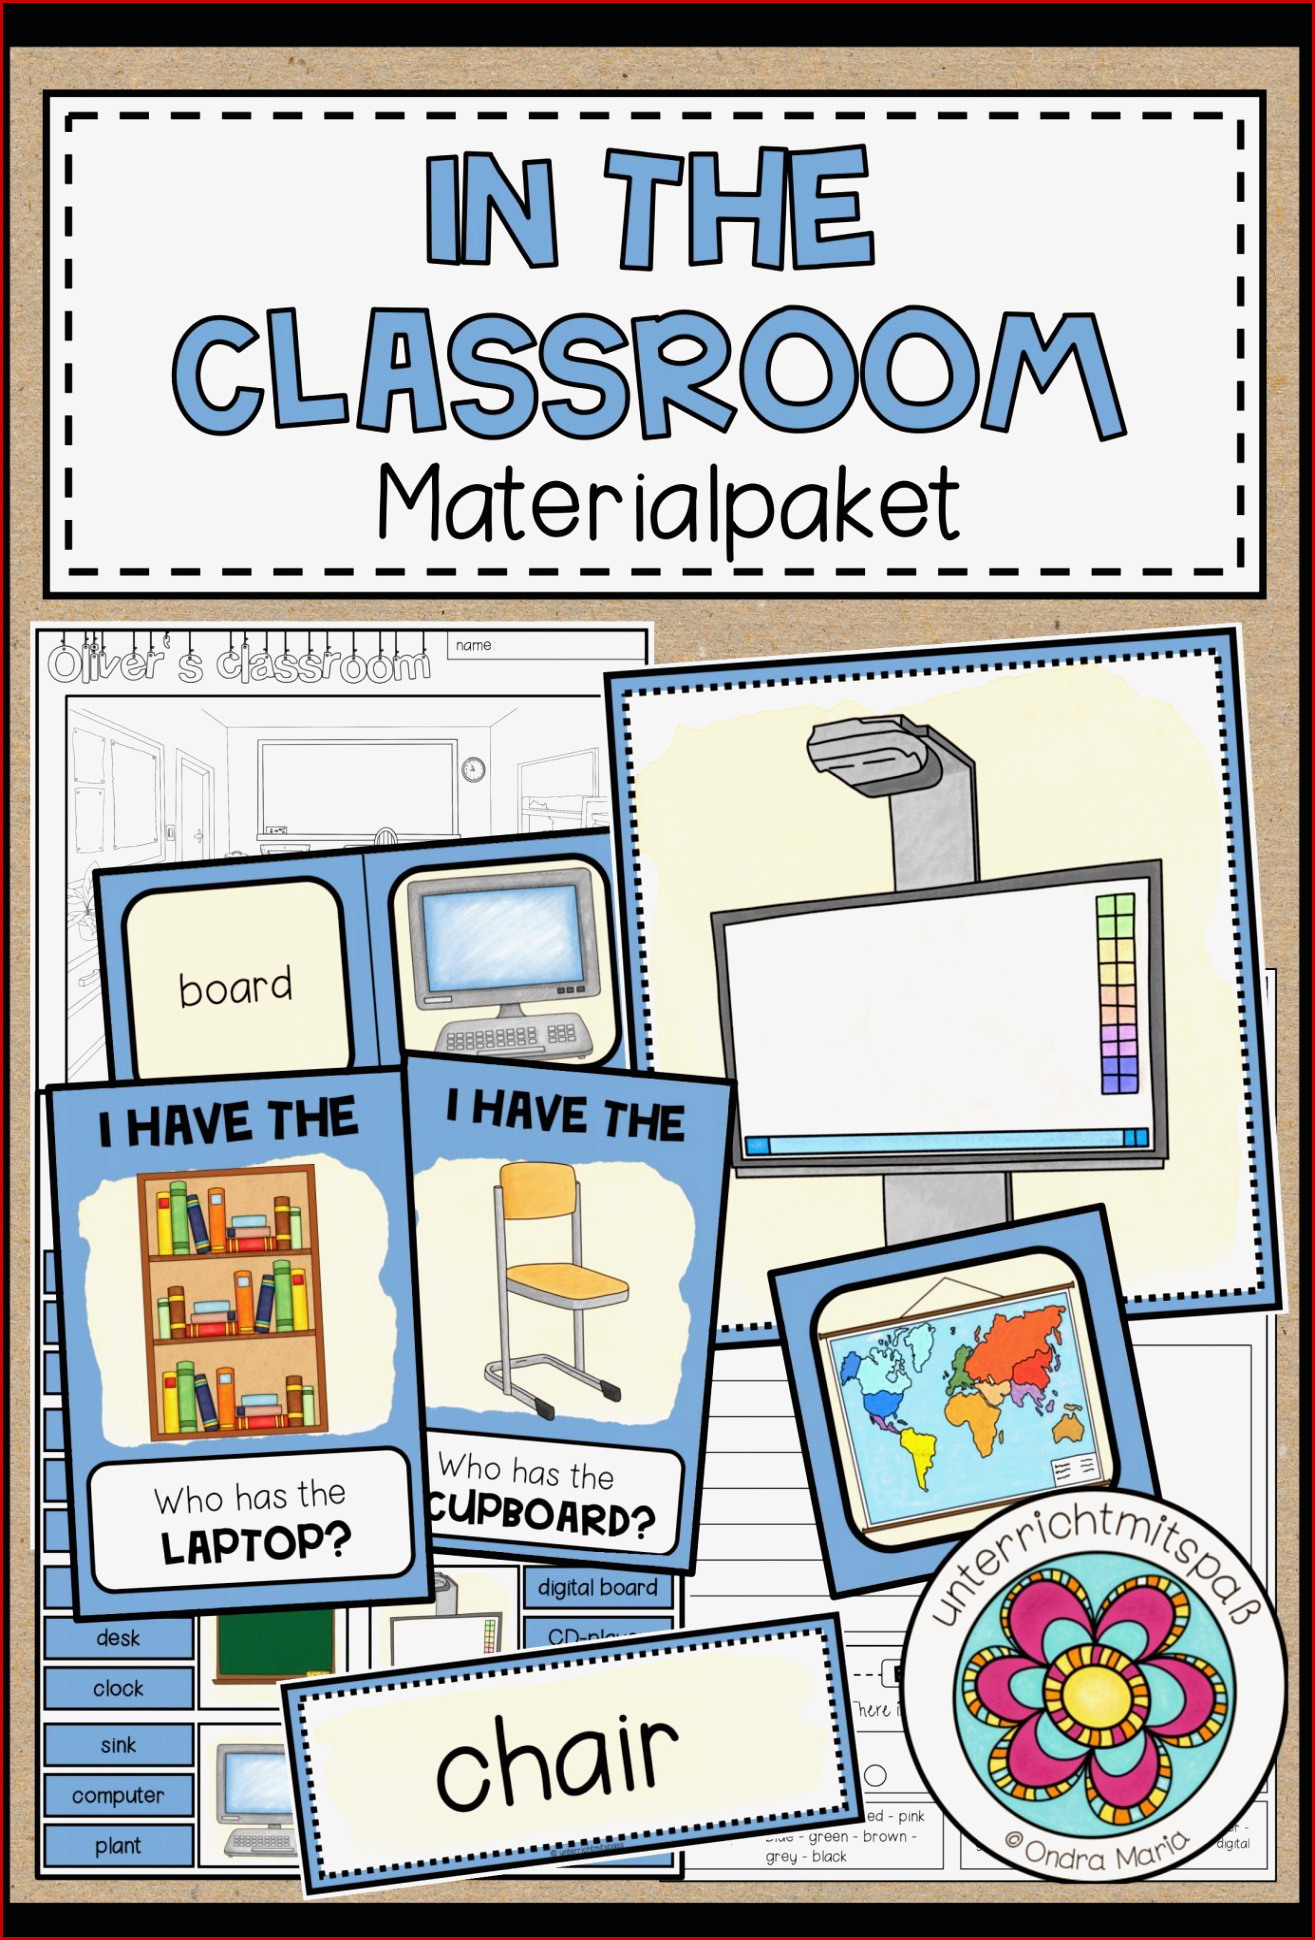 In the Classroom Classroom Furniture Materialpaket